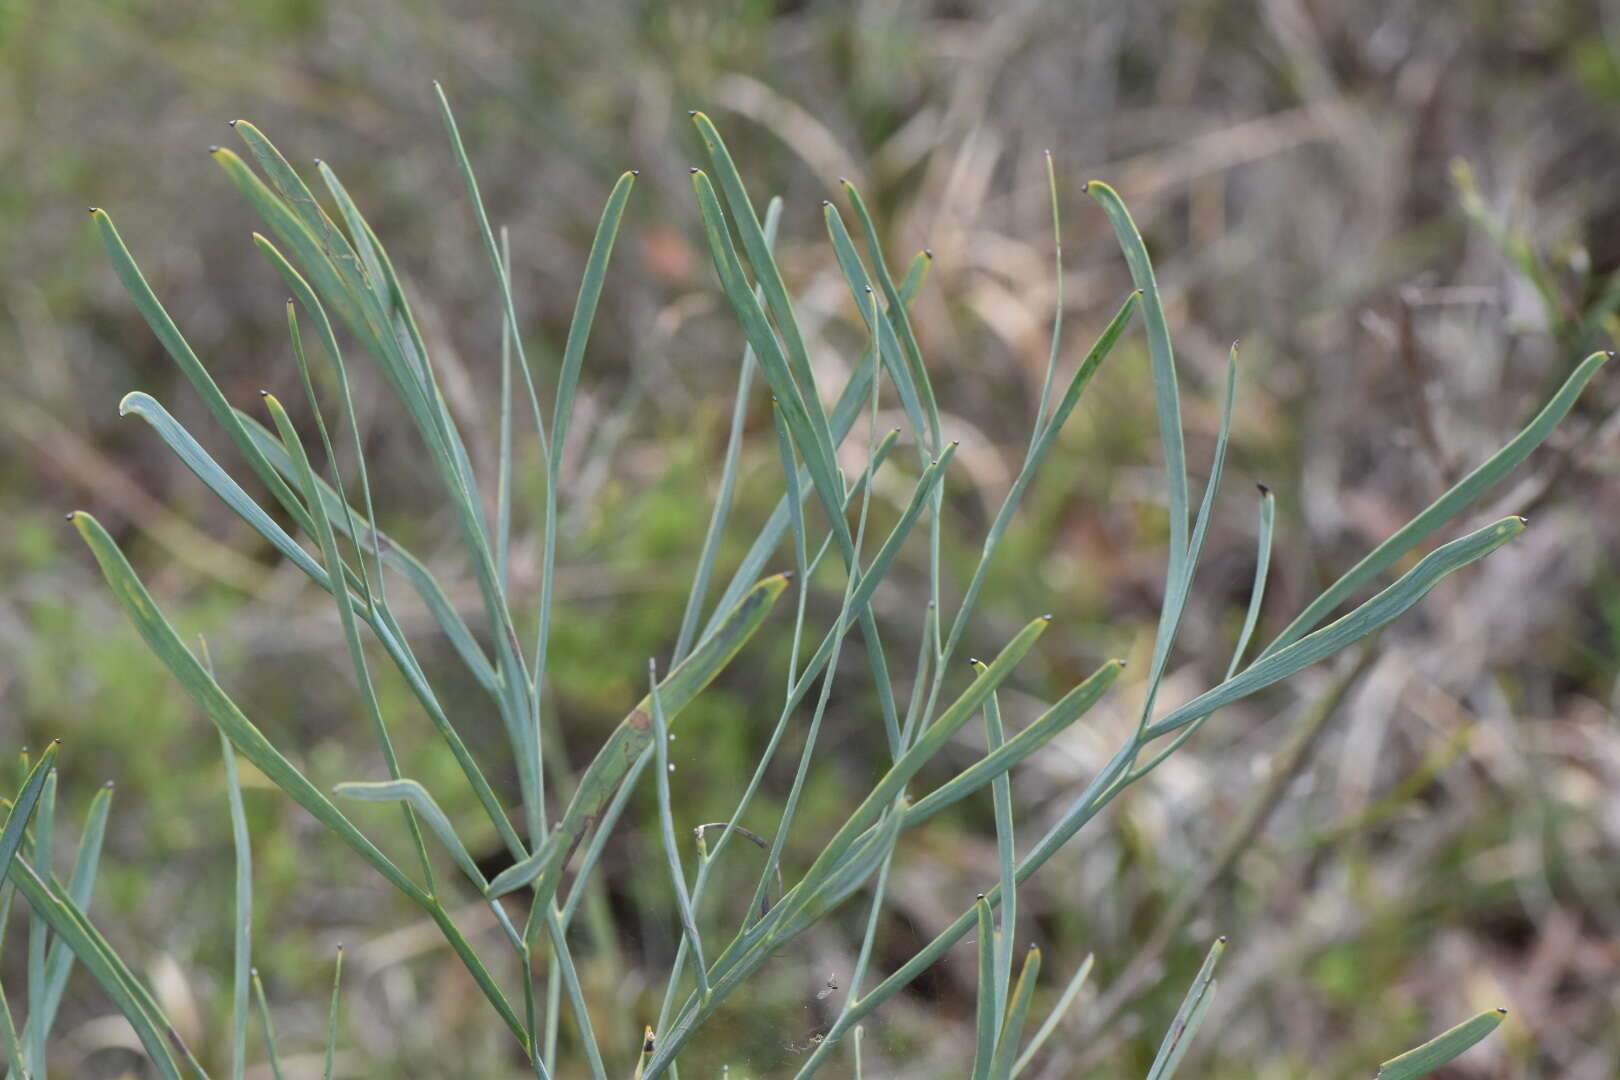 Image of Stirlingia latifolia (R. Br.) Steudel